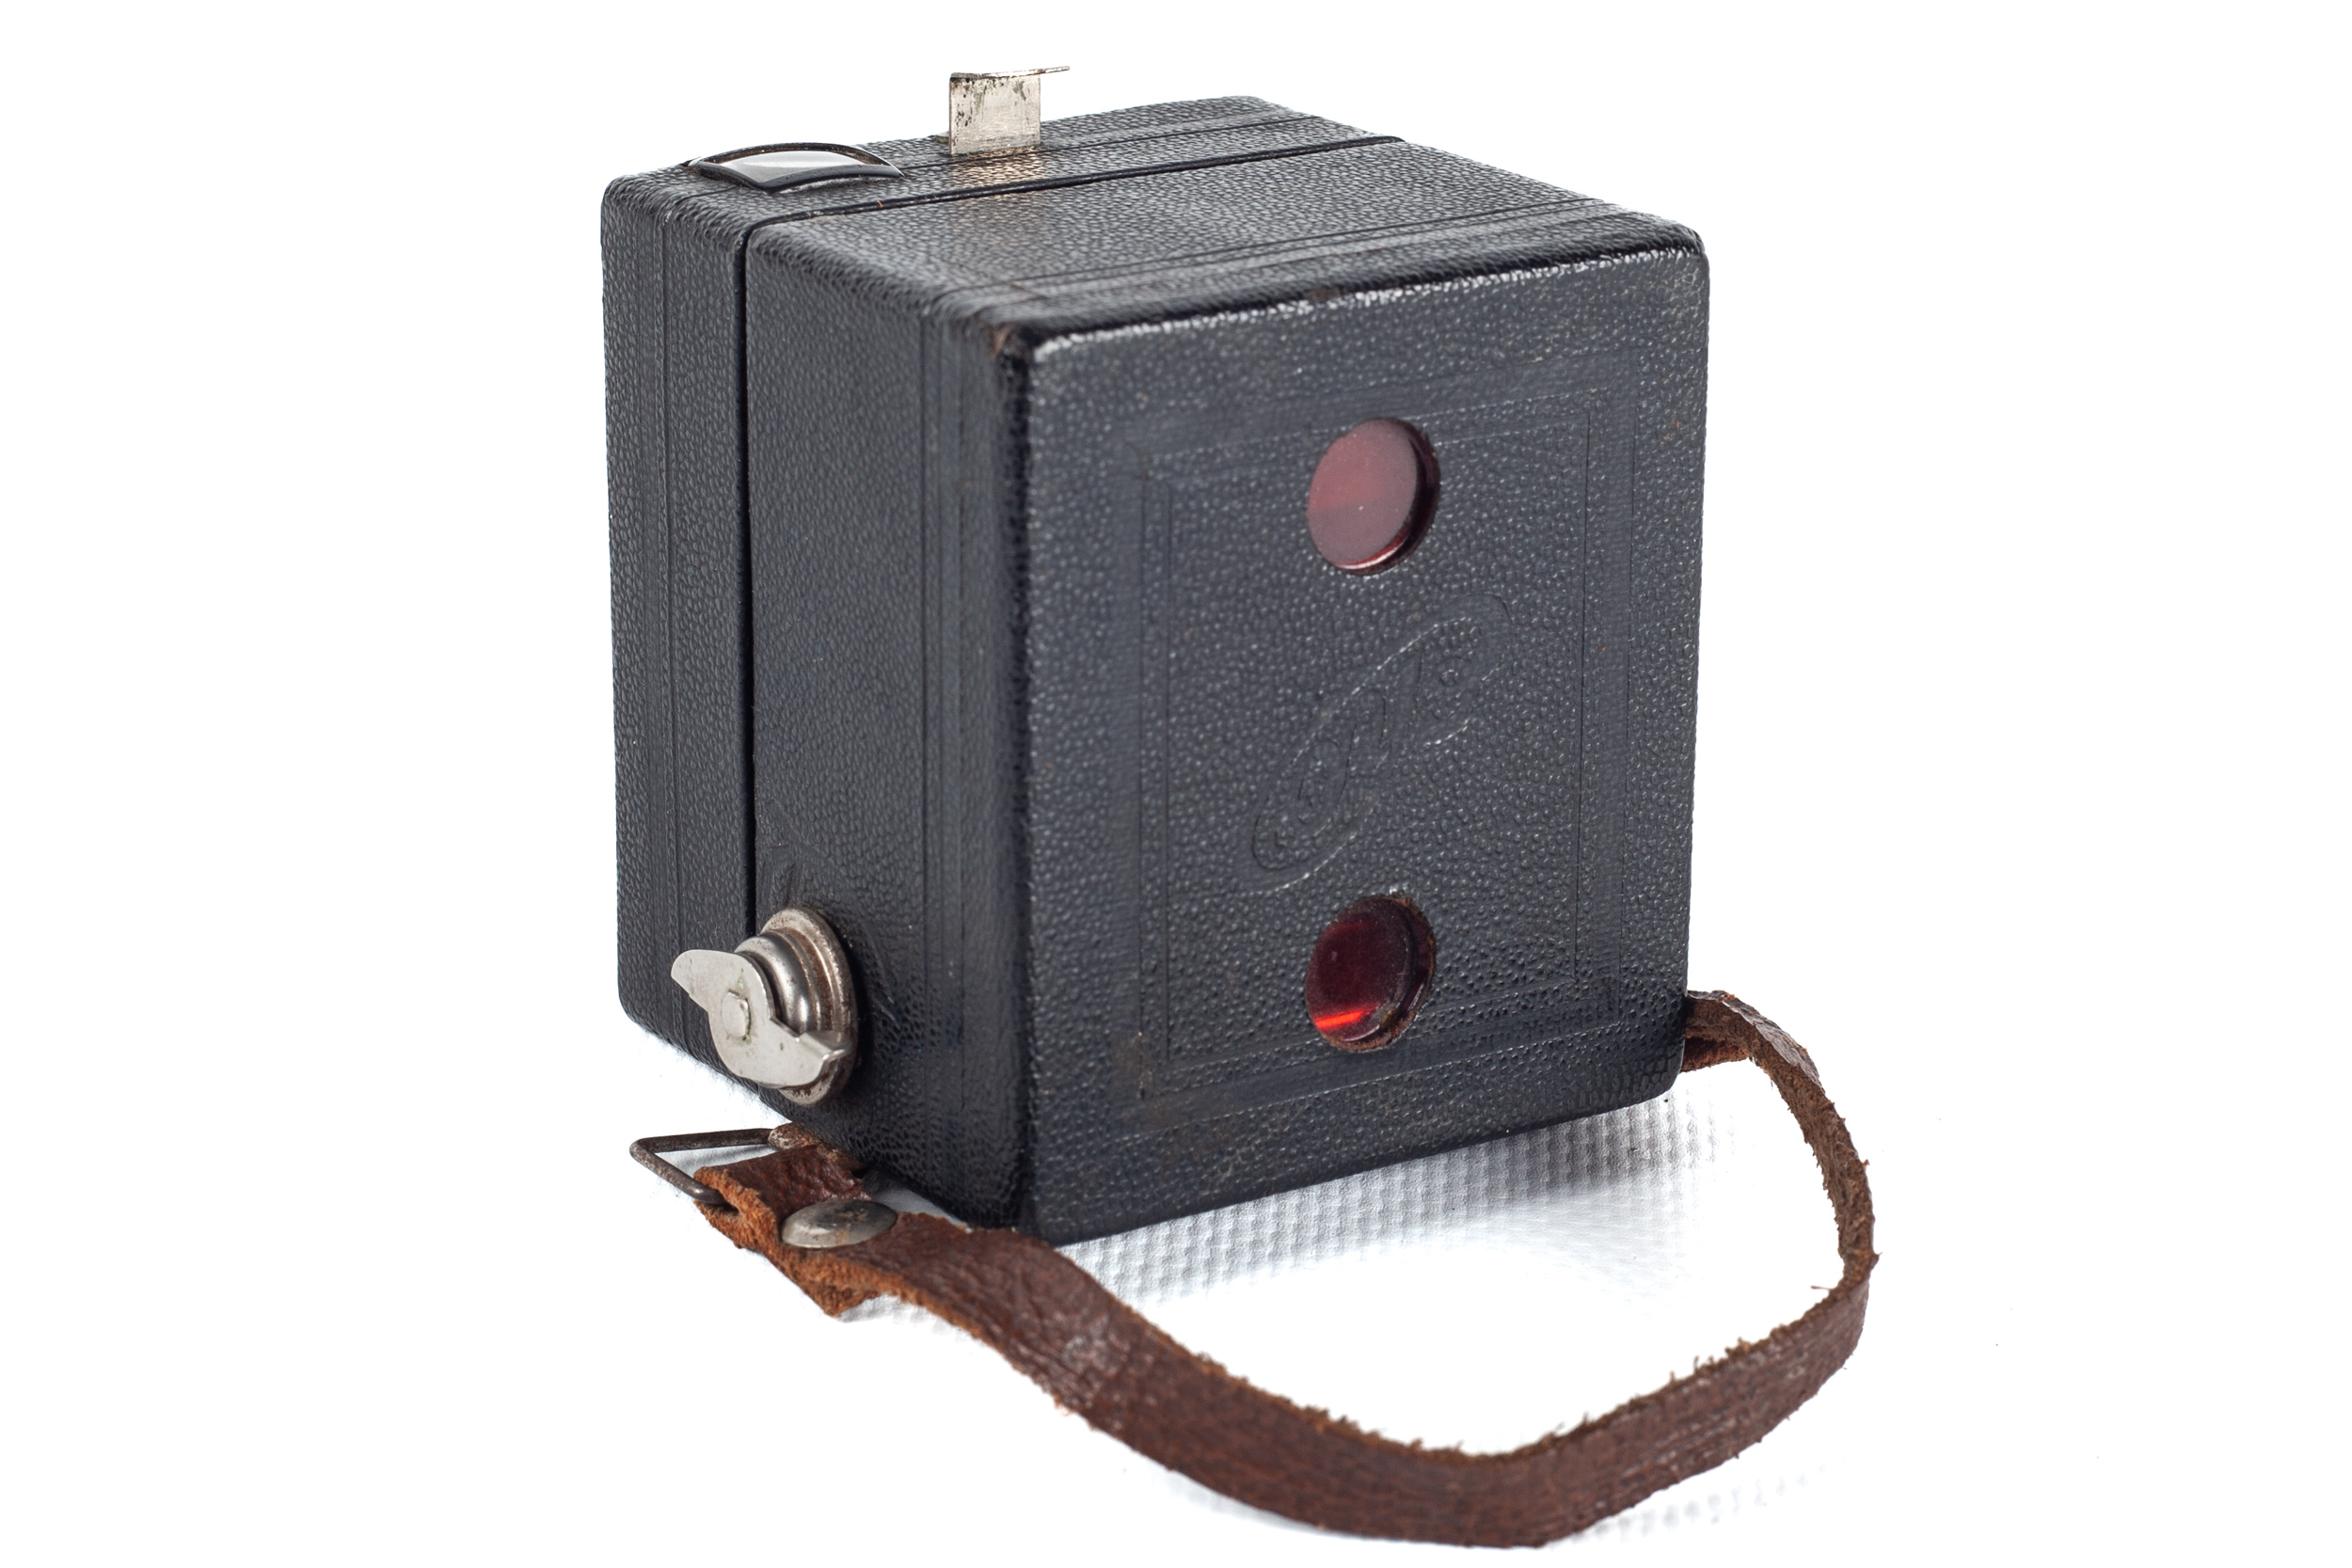 An Eho 3x4 127 baby box camera with a Duplar 1:11 lens